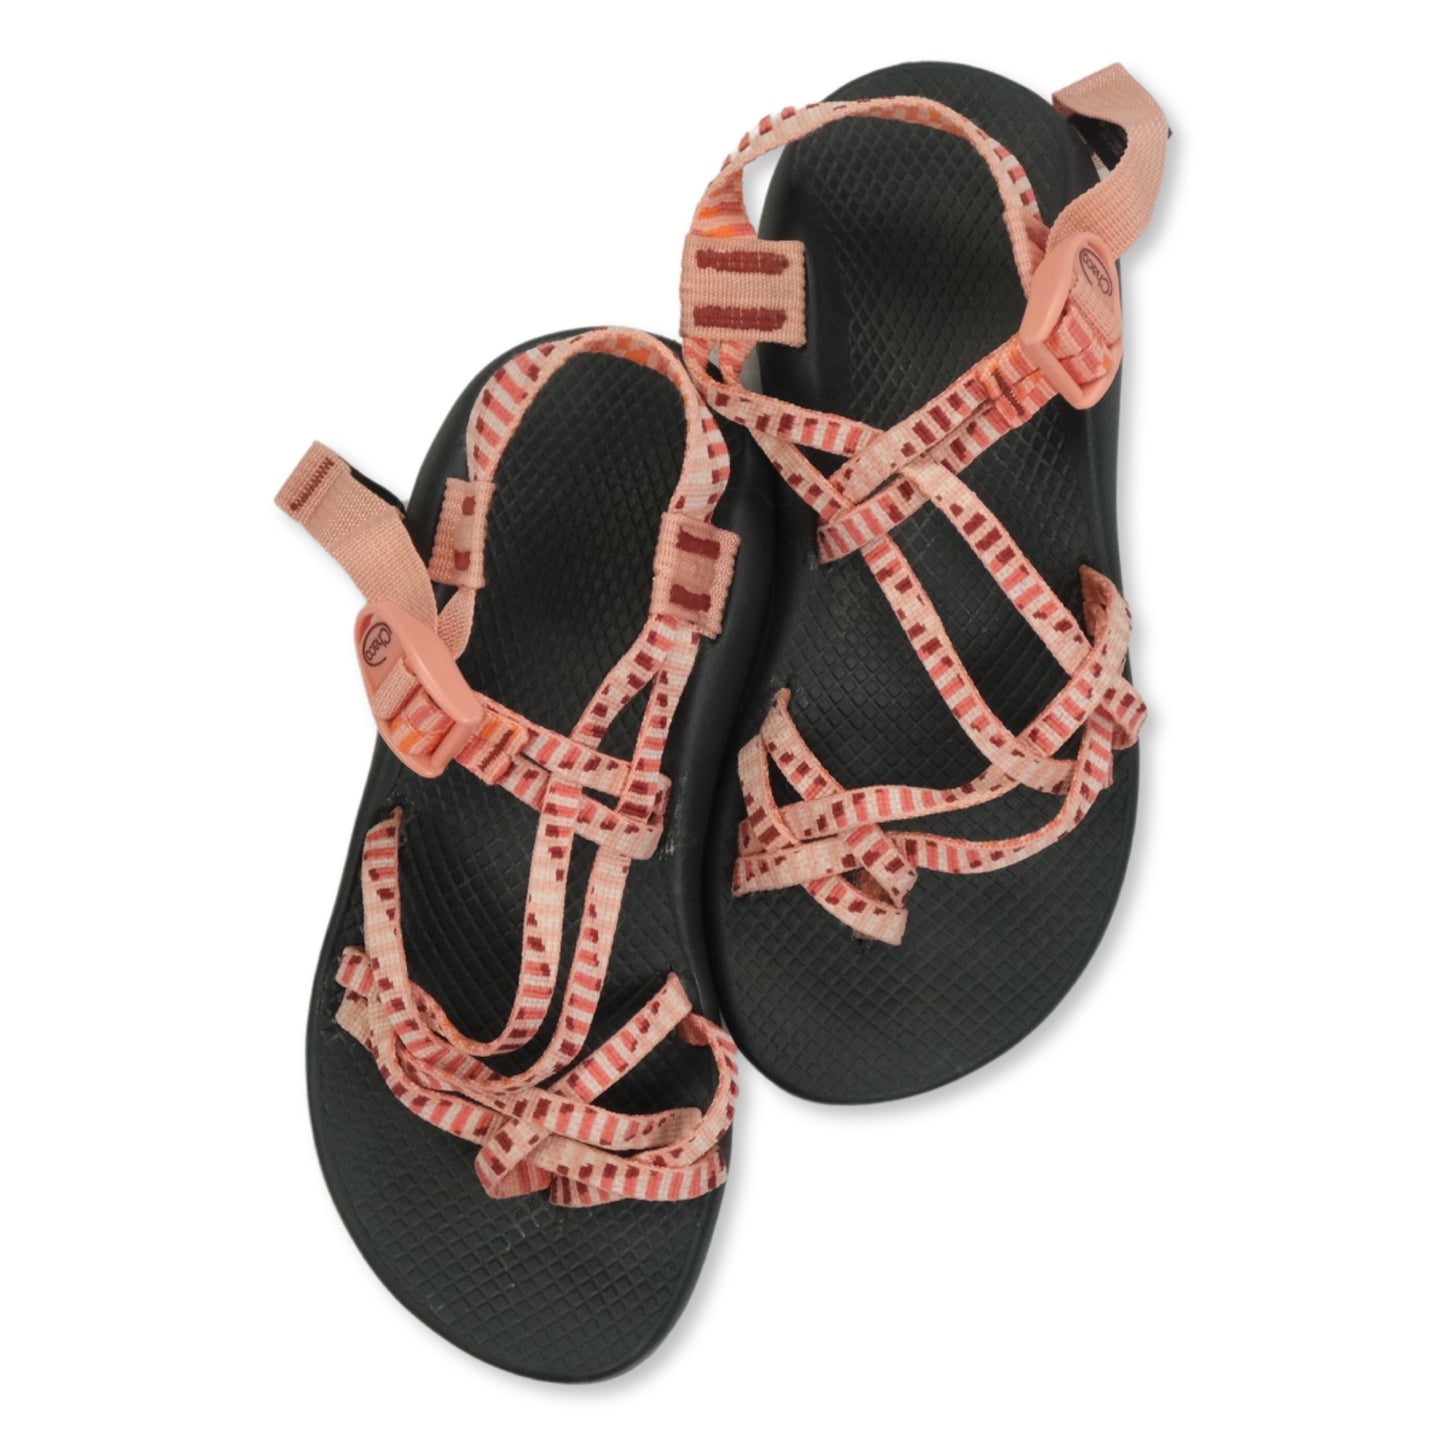 Chaco Women's ZX/2® Classic Sandal